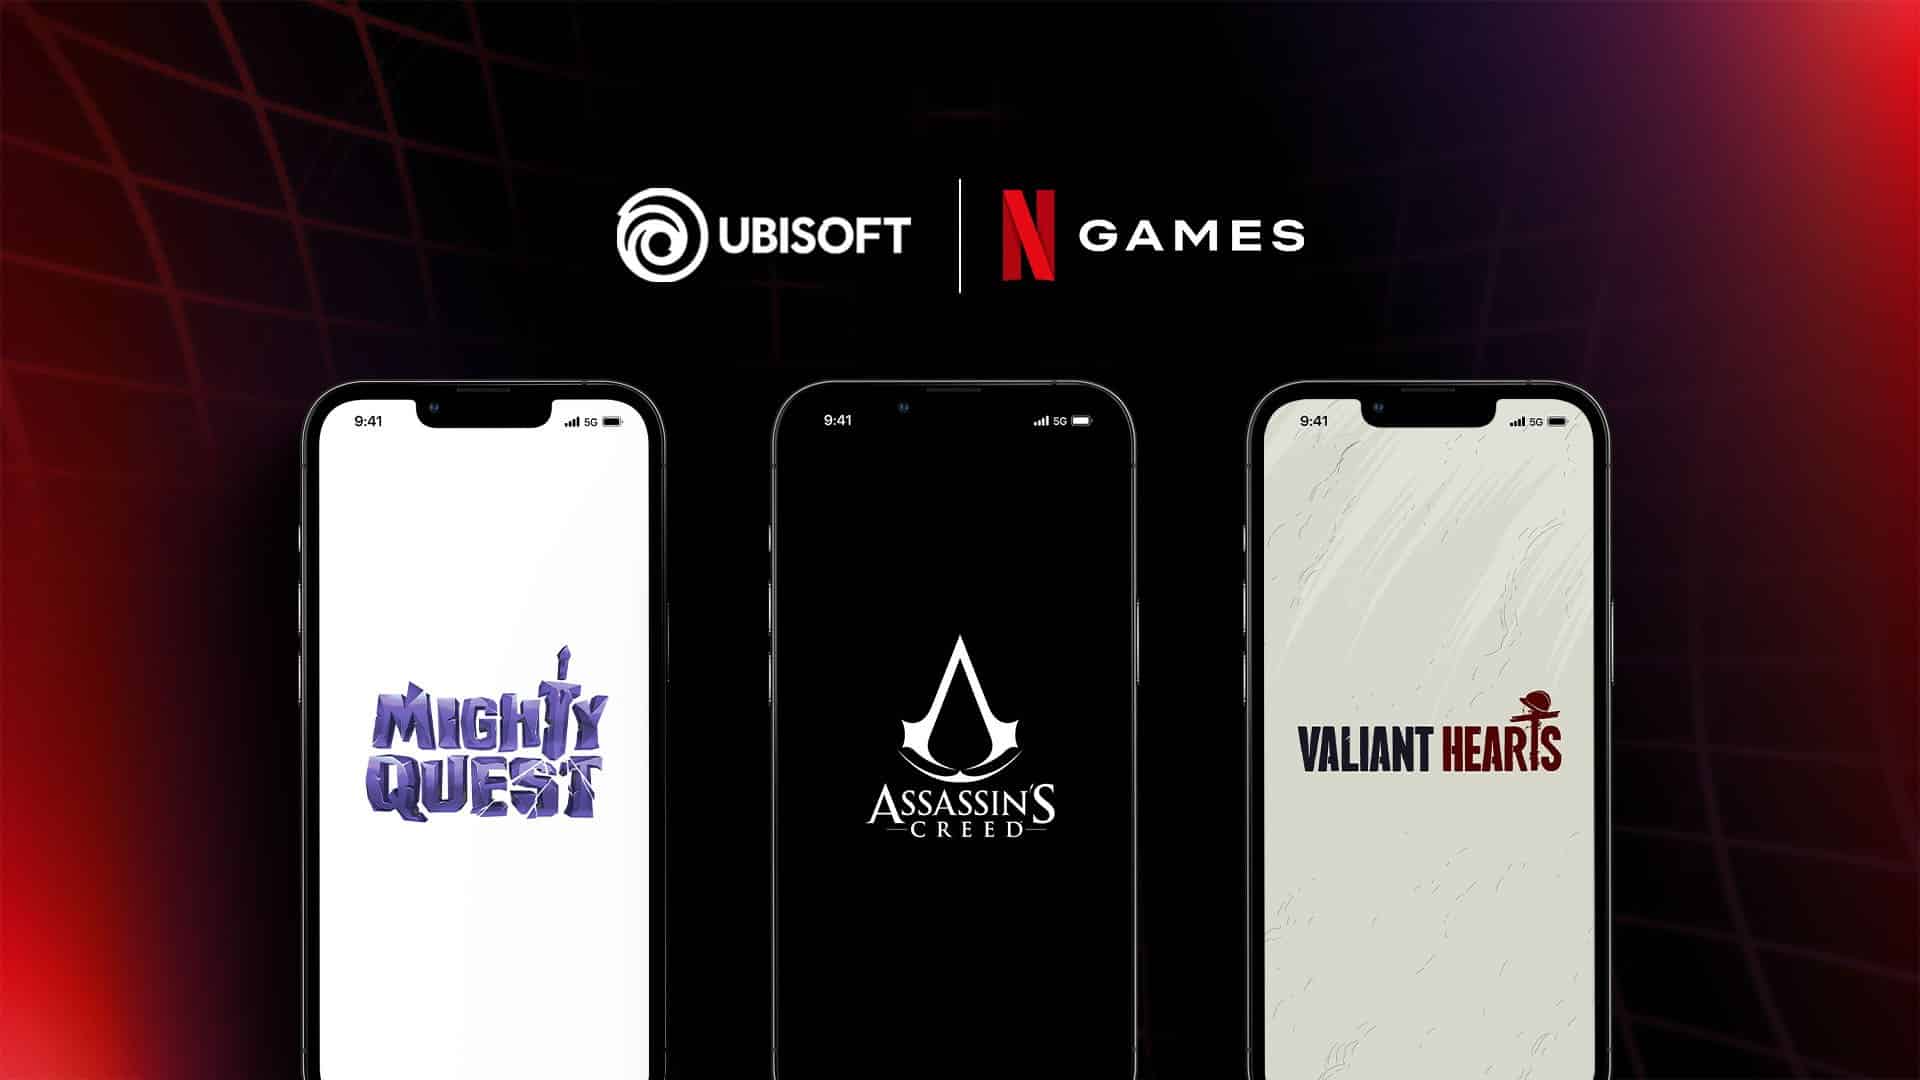 Netflix ร่วมมือกับ Ubisoft เพื่อสร้างเกมบนโทรศัพท์สามเกมแบบเอ็กซ์คลูซีฟสำหรับสมาชิกทั่วโลกตั้งแต่ปี 2566 เป็นต้นไป